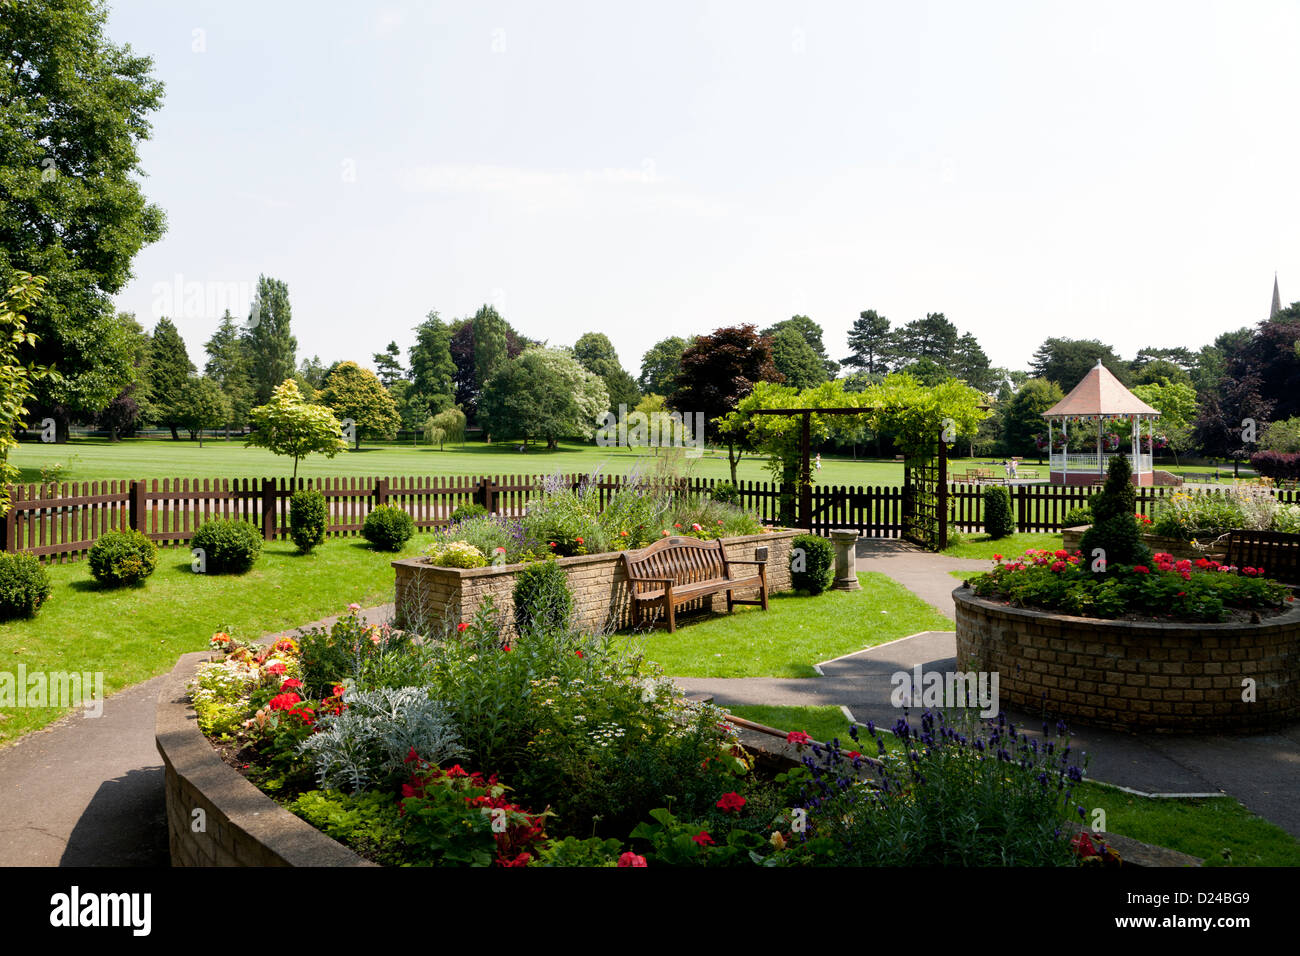 The sensory garden in John Coles Park in Chippenham, Wiltshire, England. Stock Photo